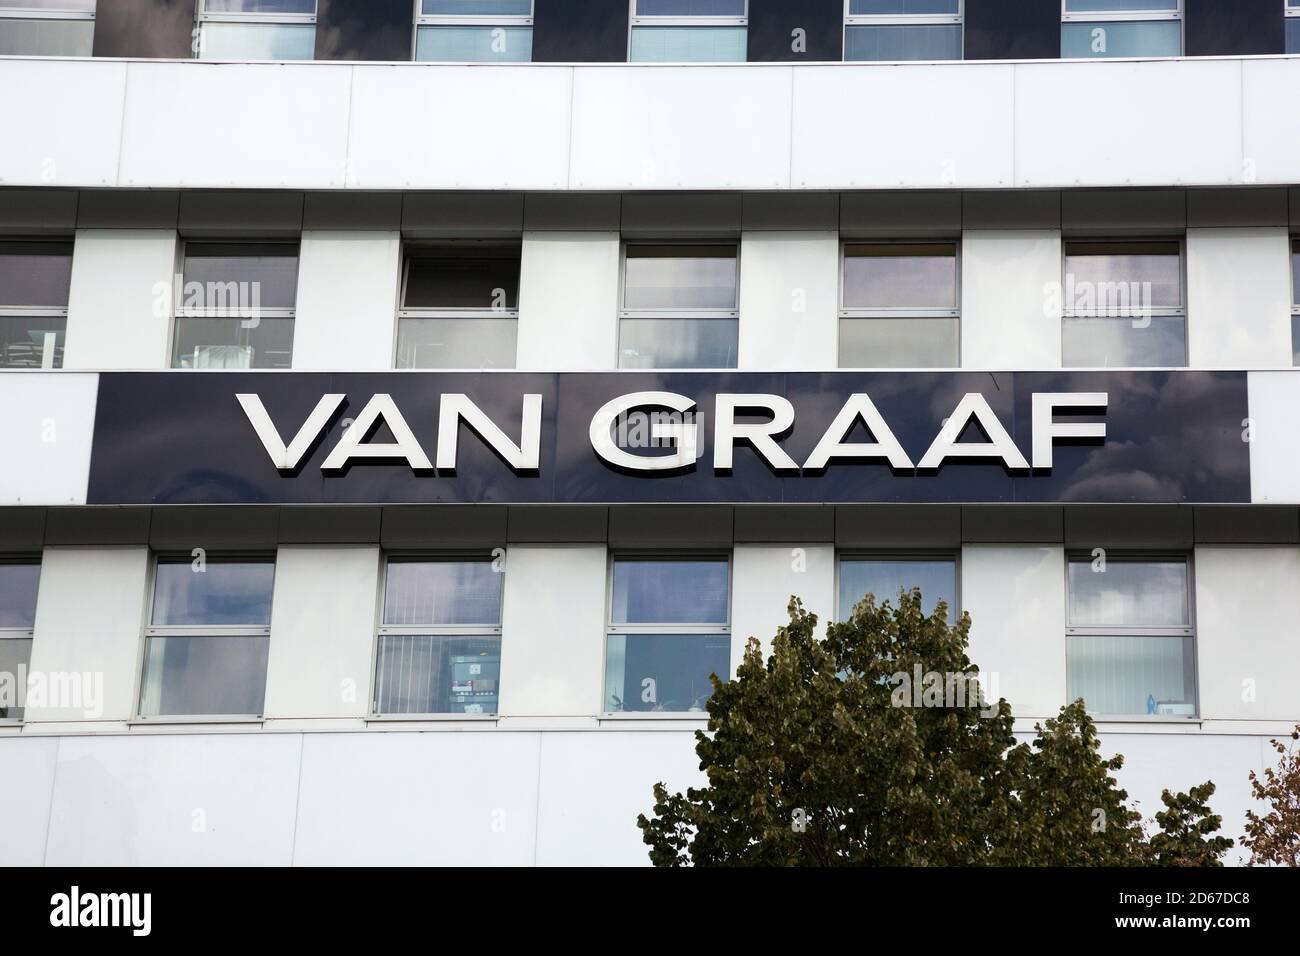 Van Graaf sign on clothing store in Prague Stock Photo - Alamy